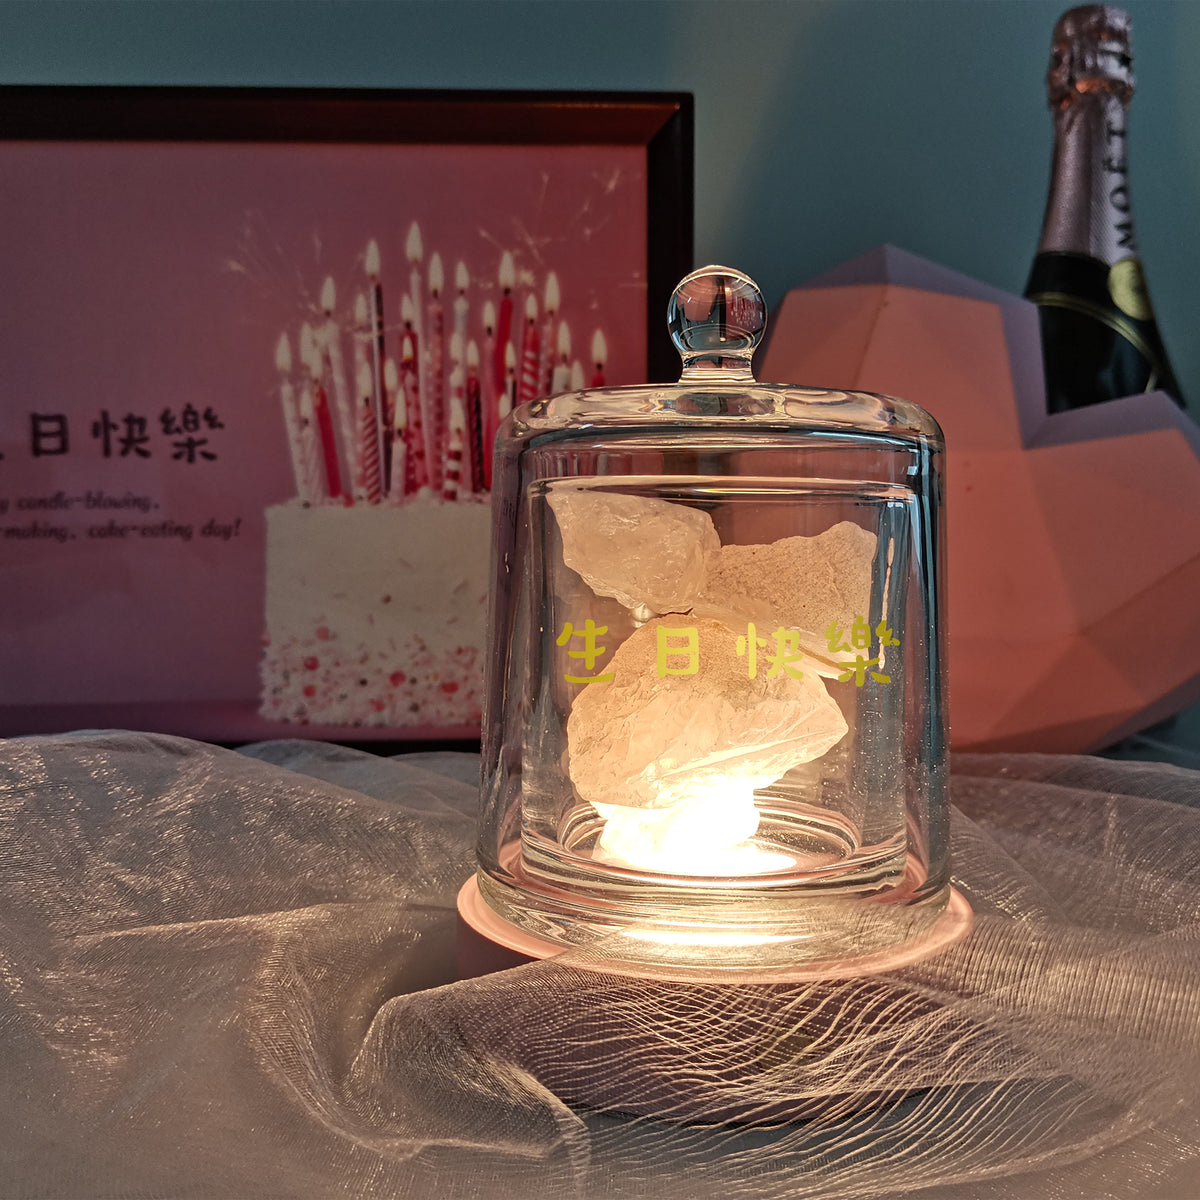 Quick Gifts|Birthday Gift， Aromatherapy set pink crystal fireless aromatherapy， esg gift